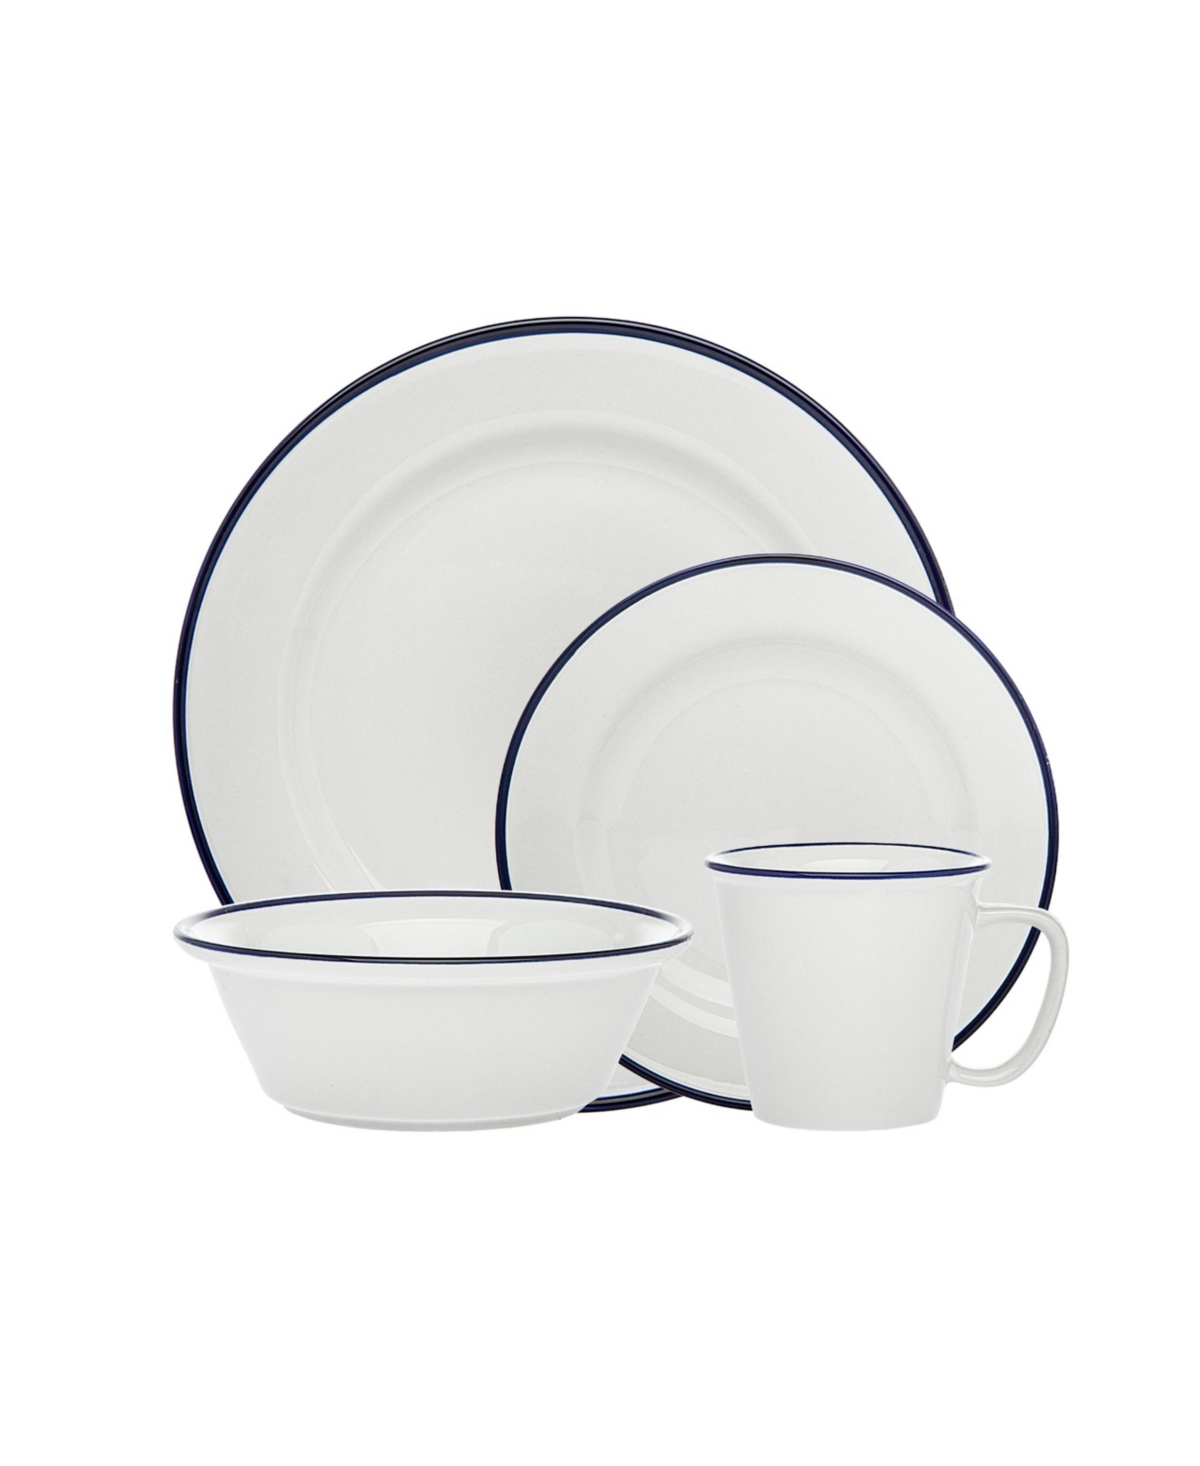 Bistro Blue Band 16-pc Porcelain Dinnerware Set - White